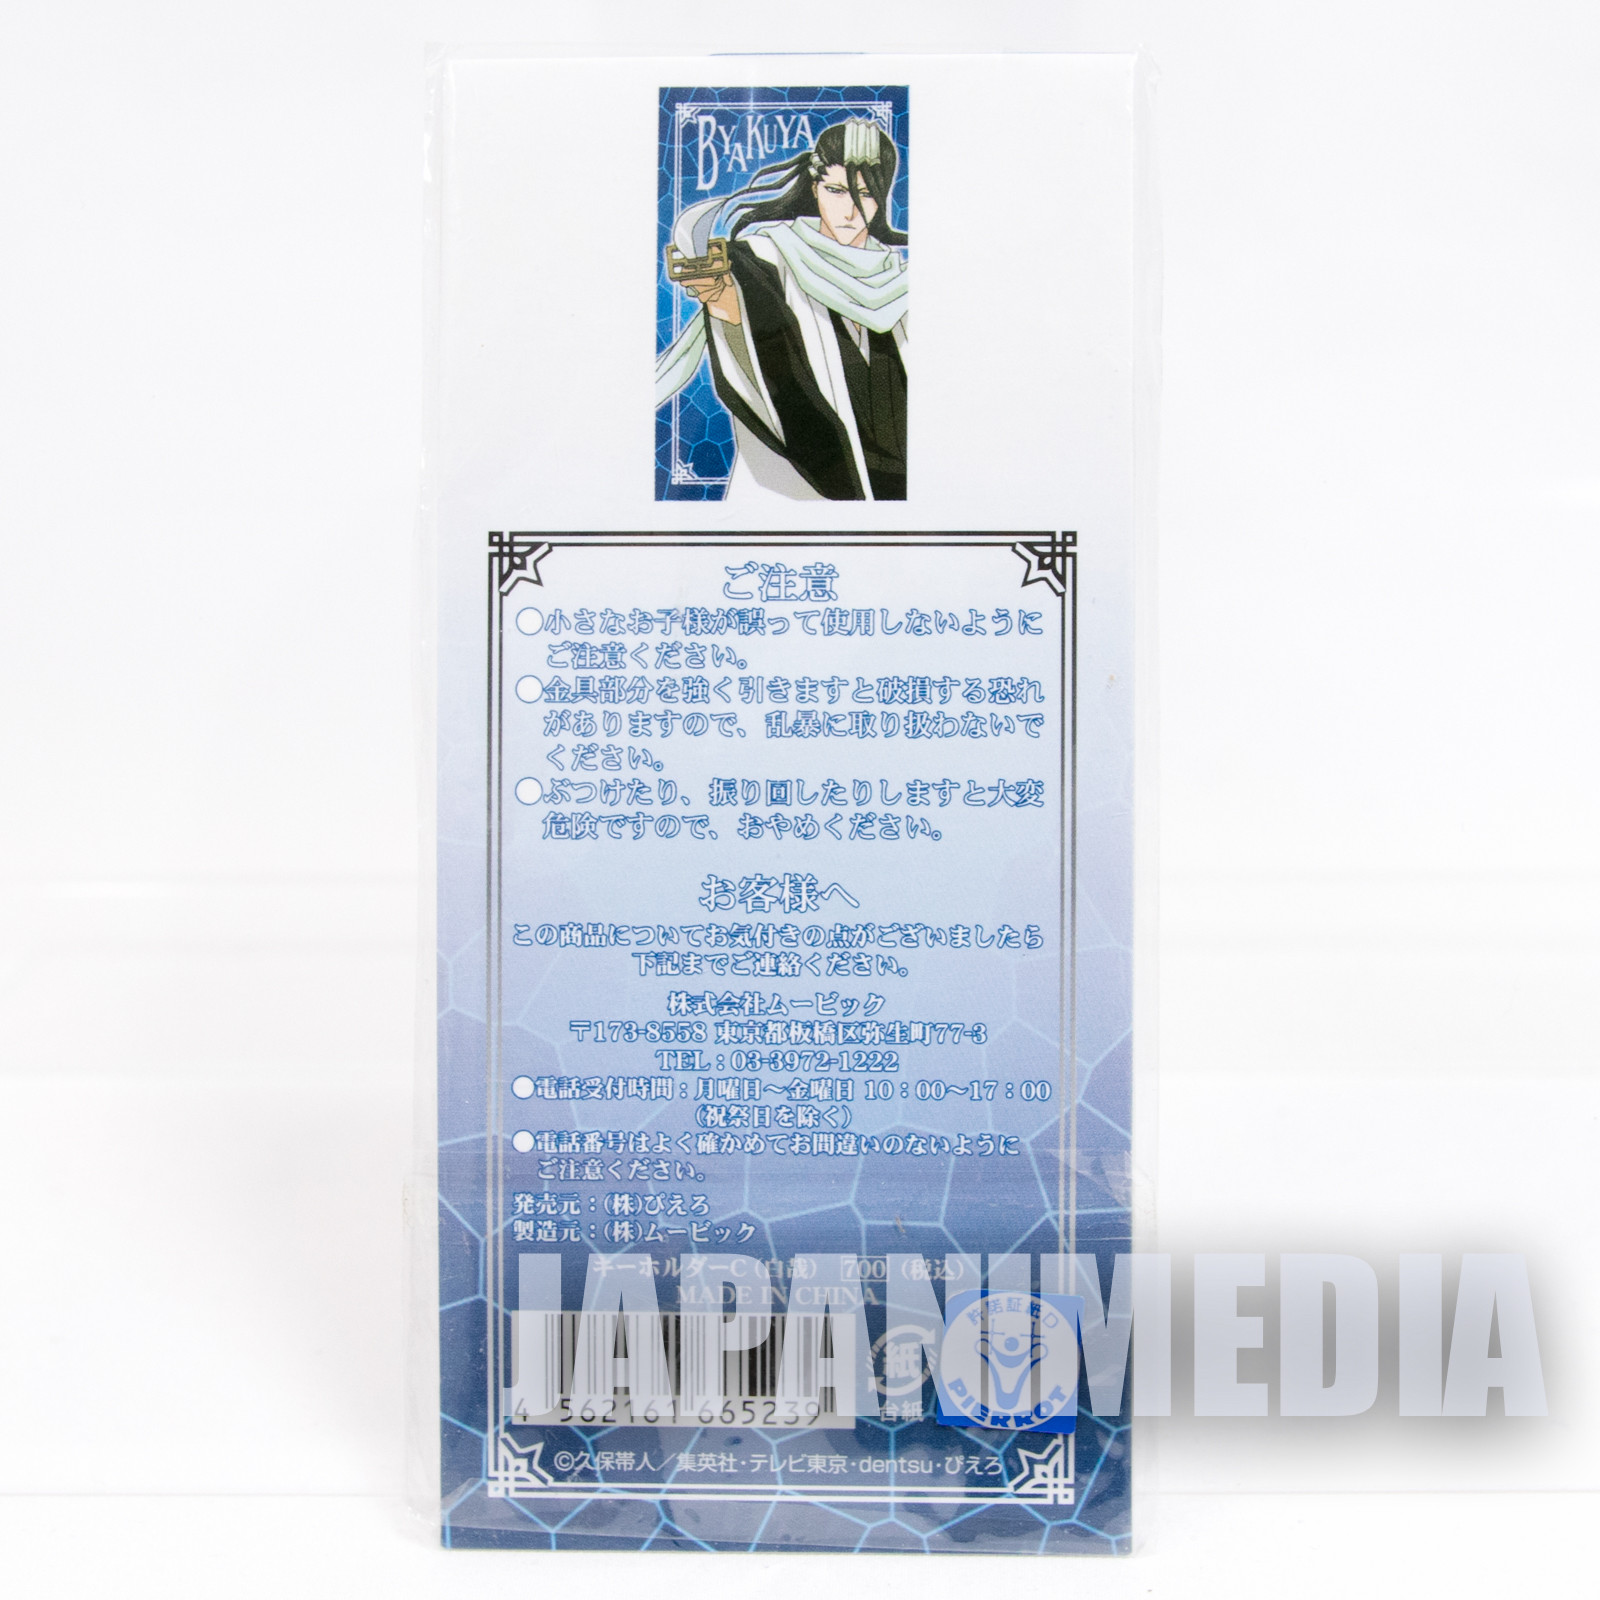 Bleach Byakuya Kuchiki Metal Plate Keychain Japan Anime Shonen Jump Japanimedia Store